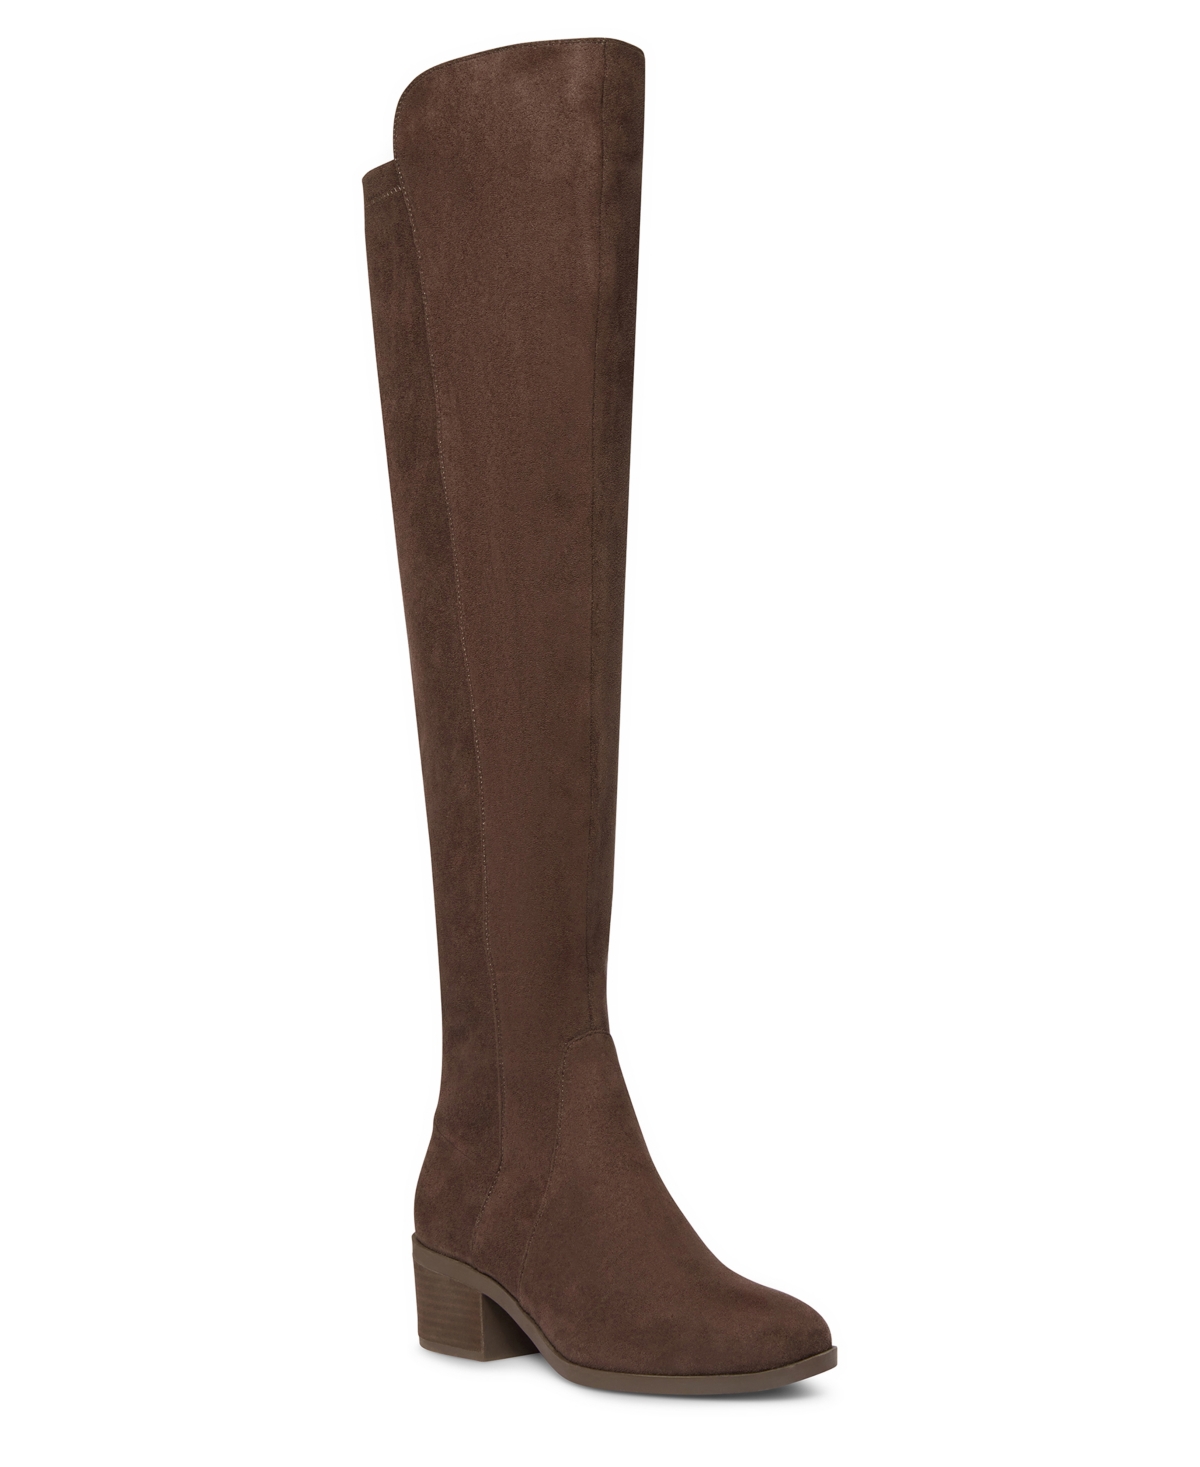 Women's Adrenna Round Toe Over-the-Knee Boots - Dark Brown Microsuede